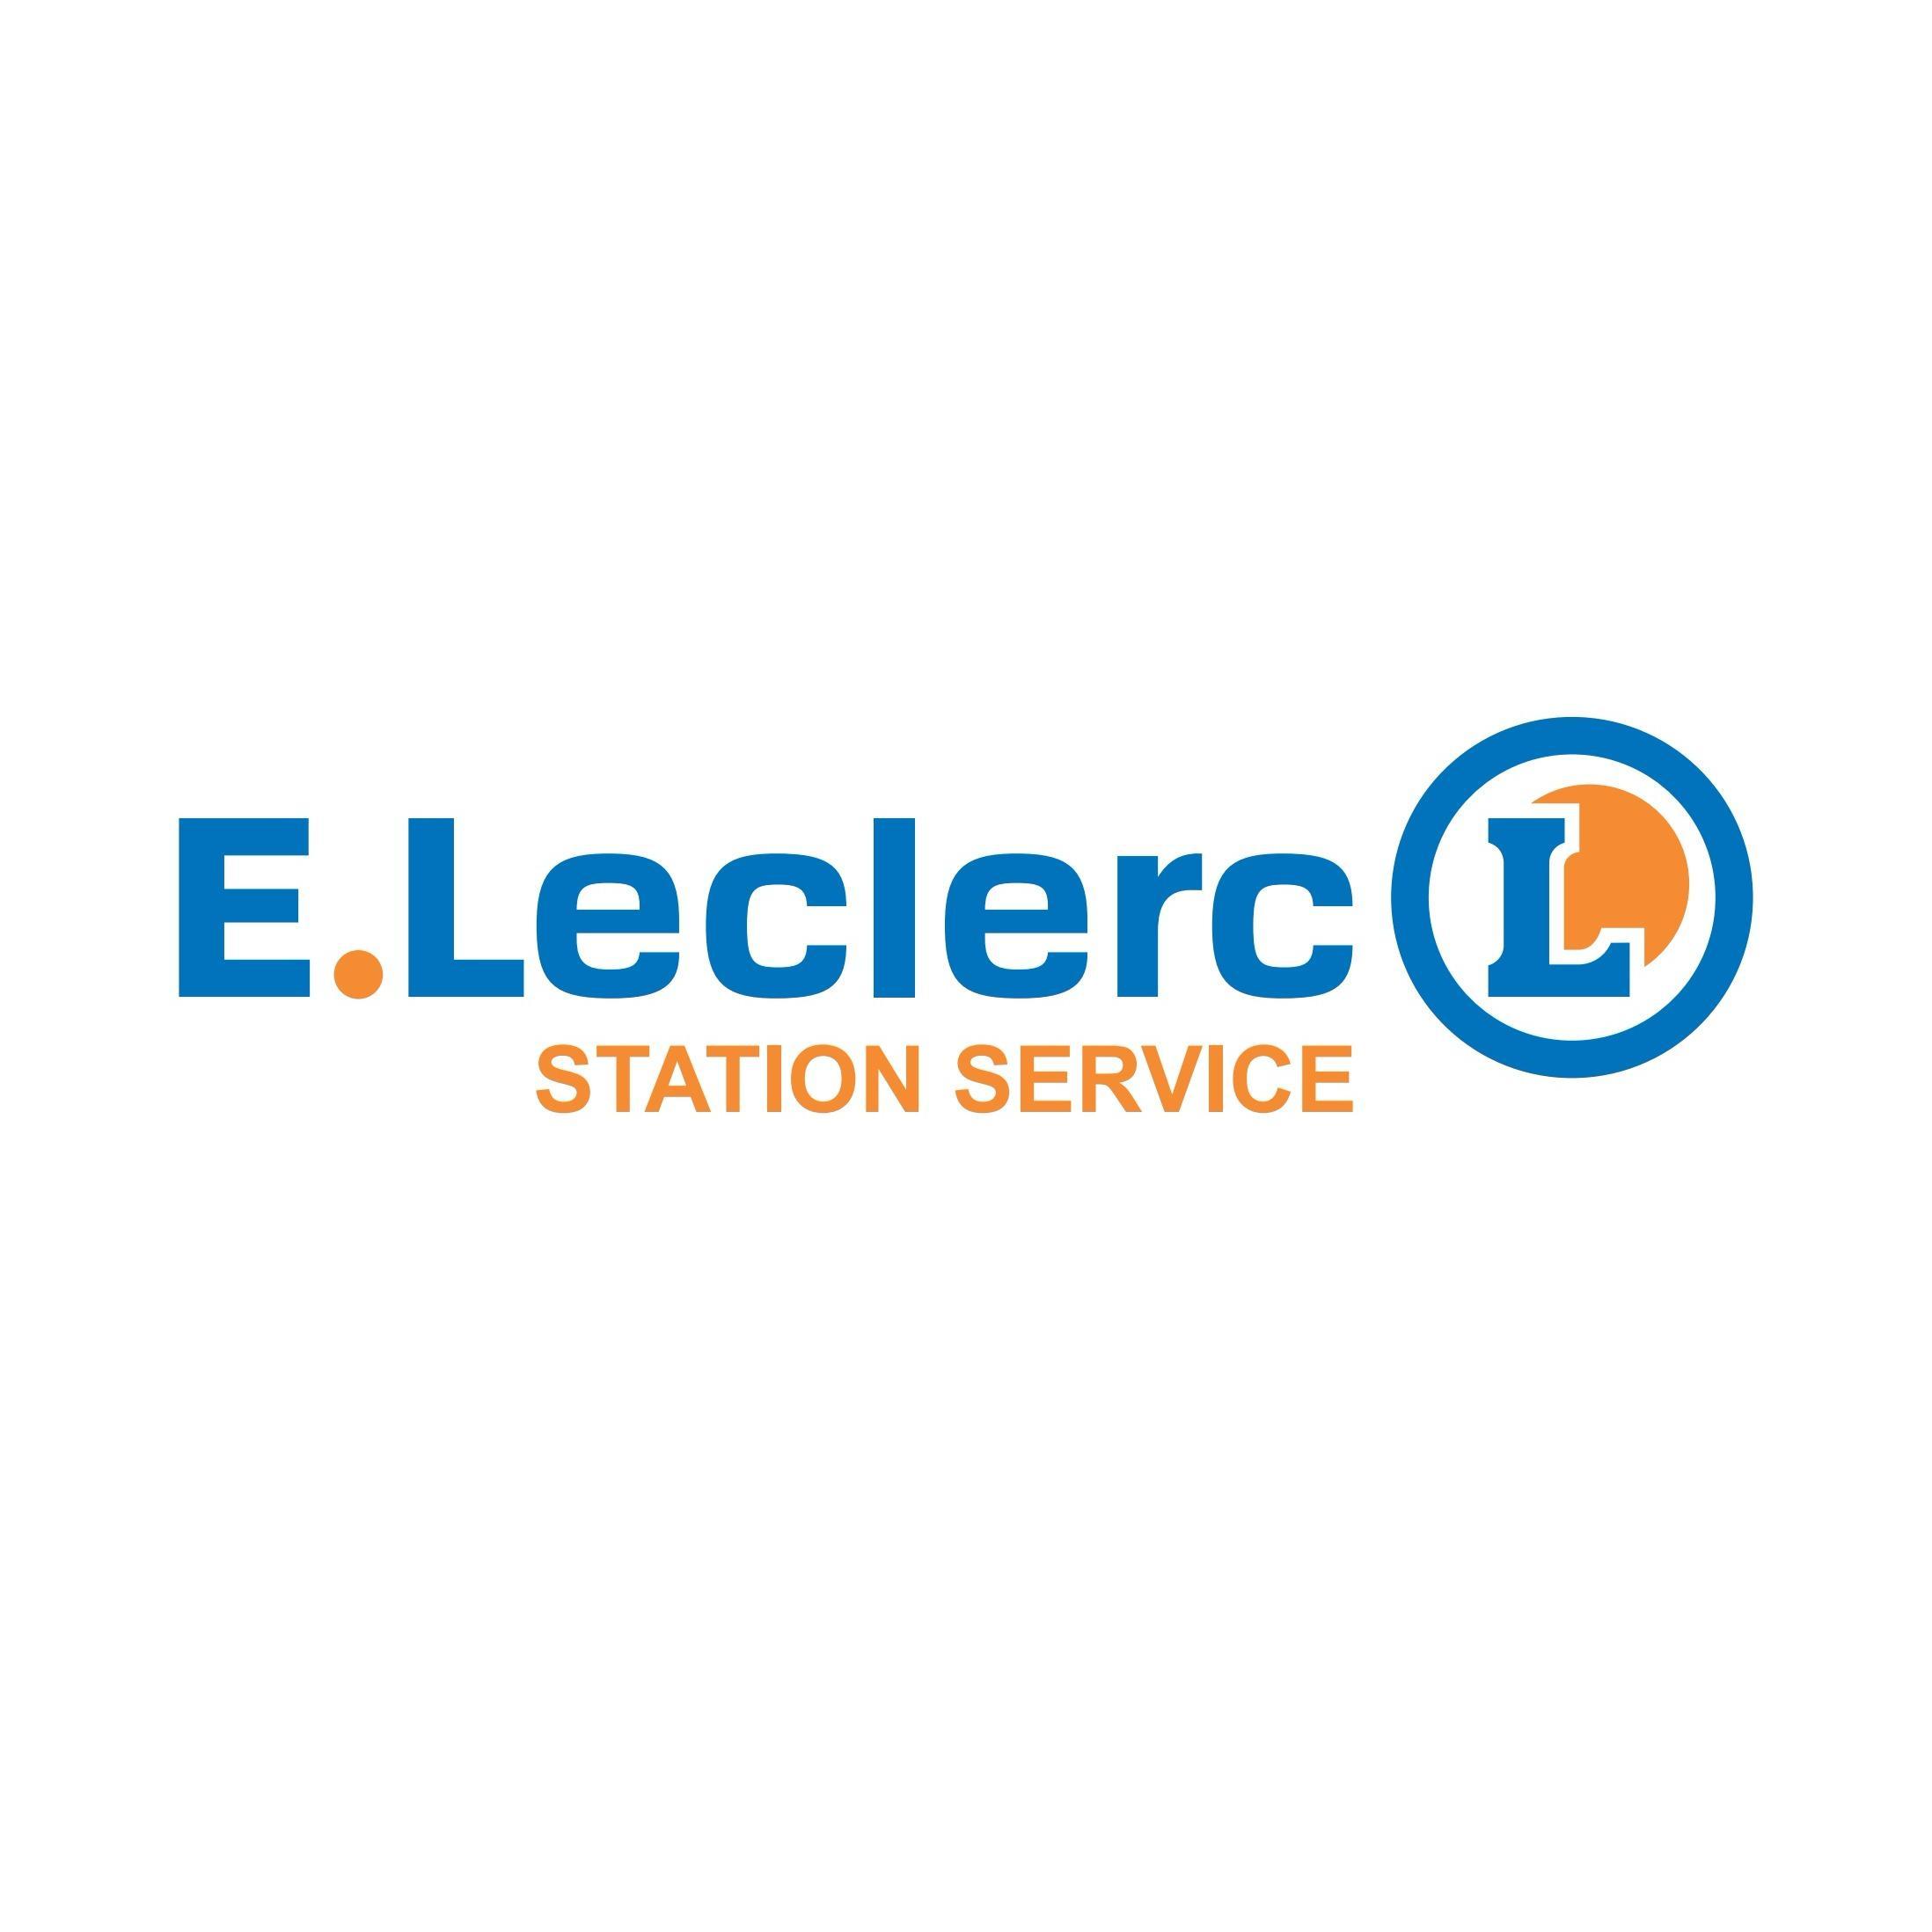 E.leclerc Station Service Dole Dole